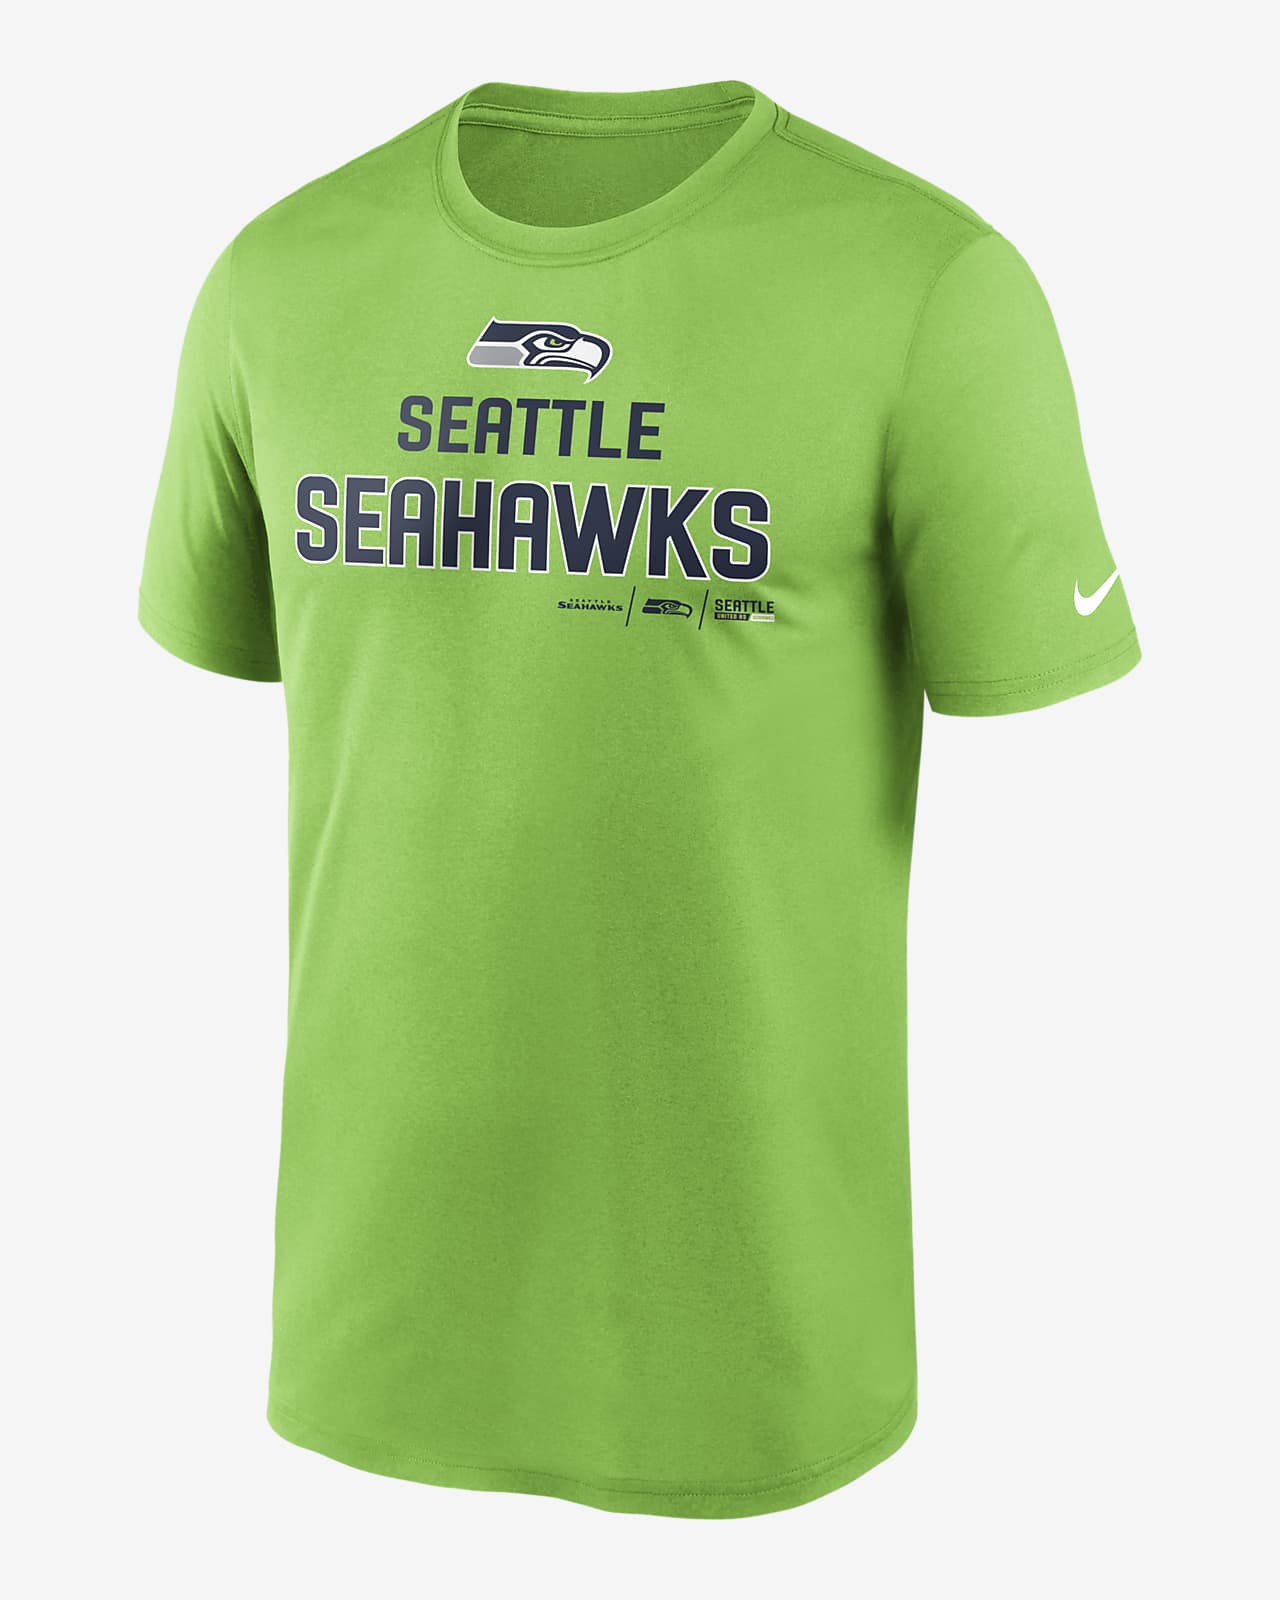 seahawks shirts